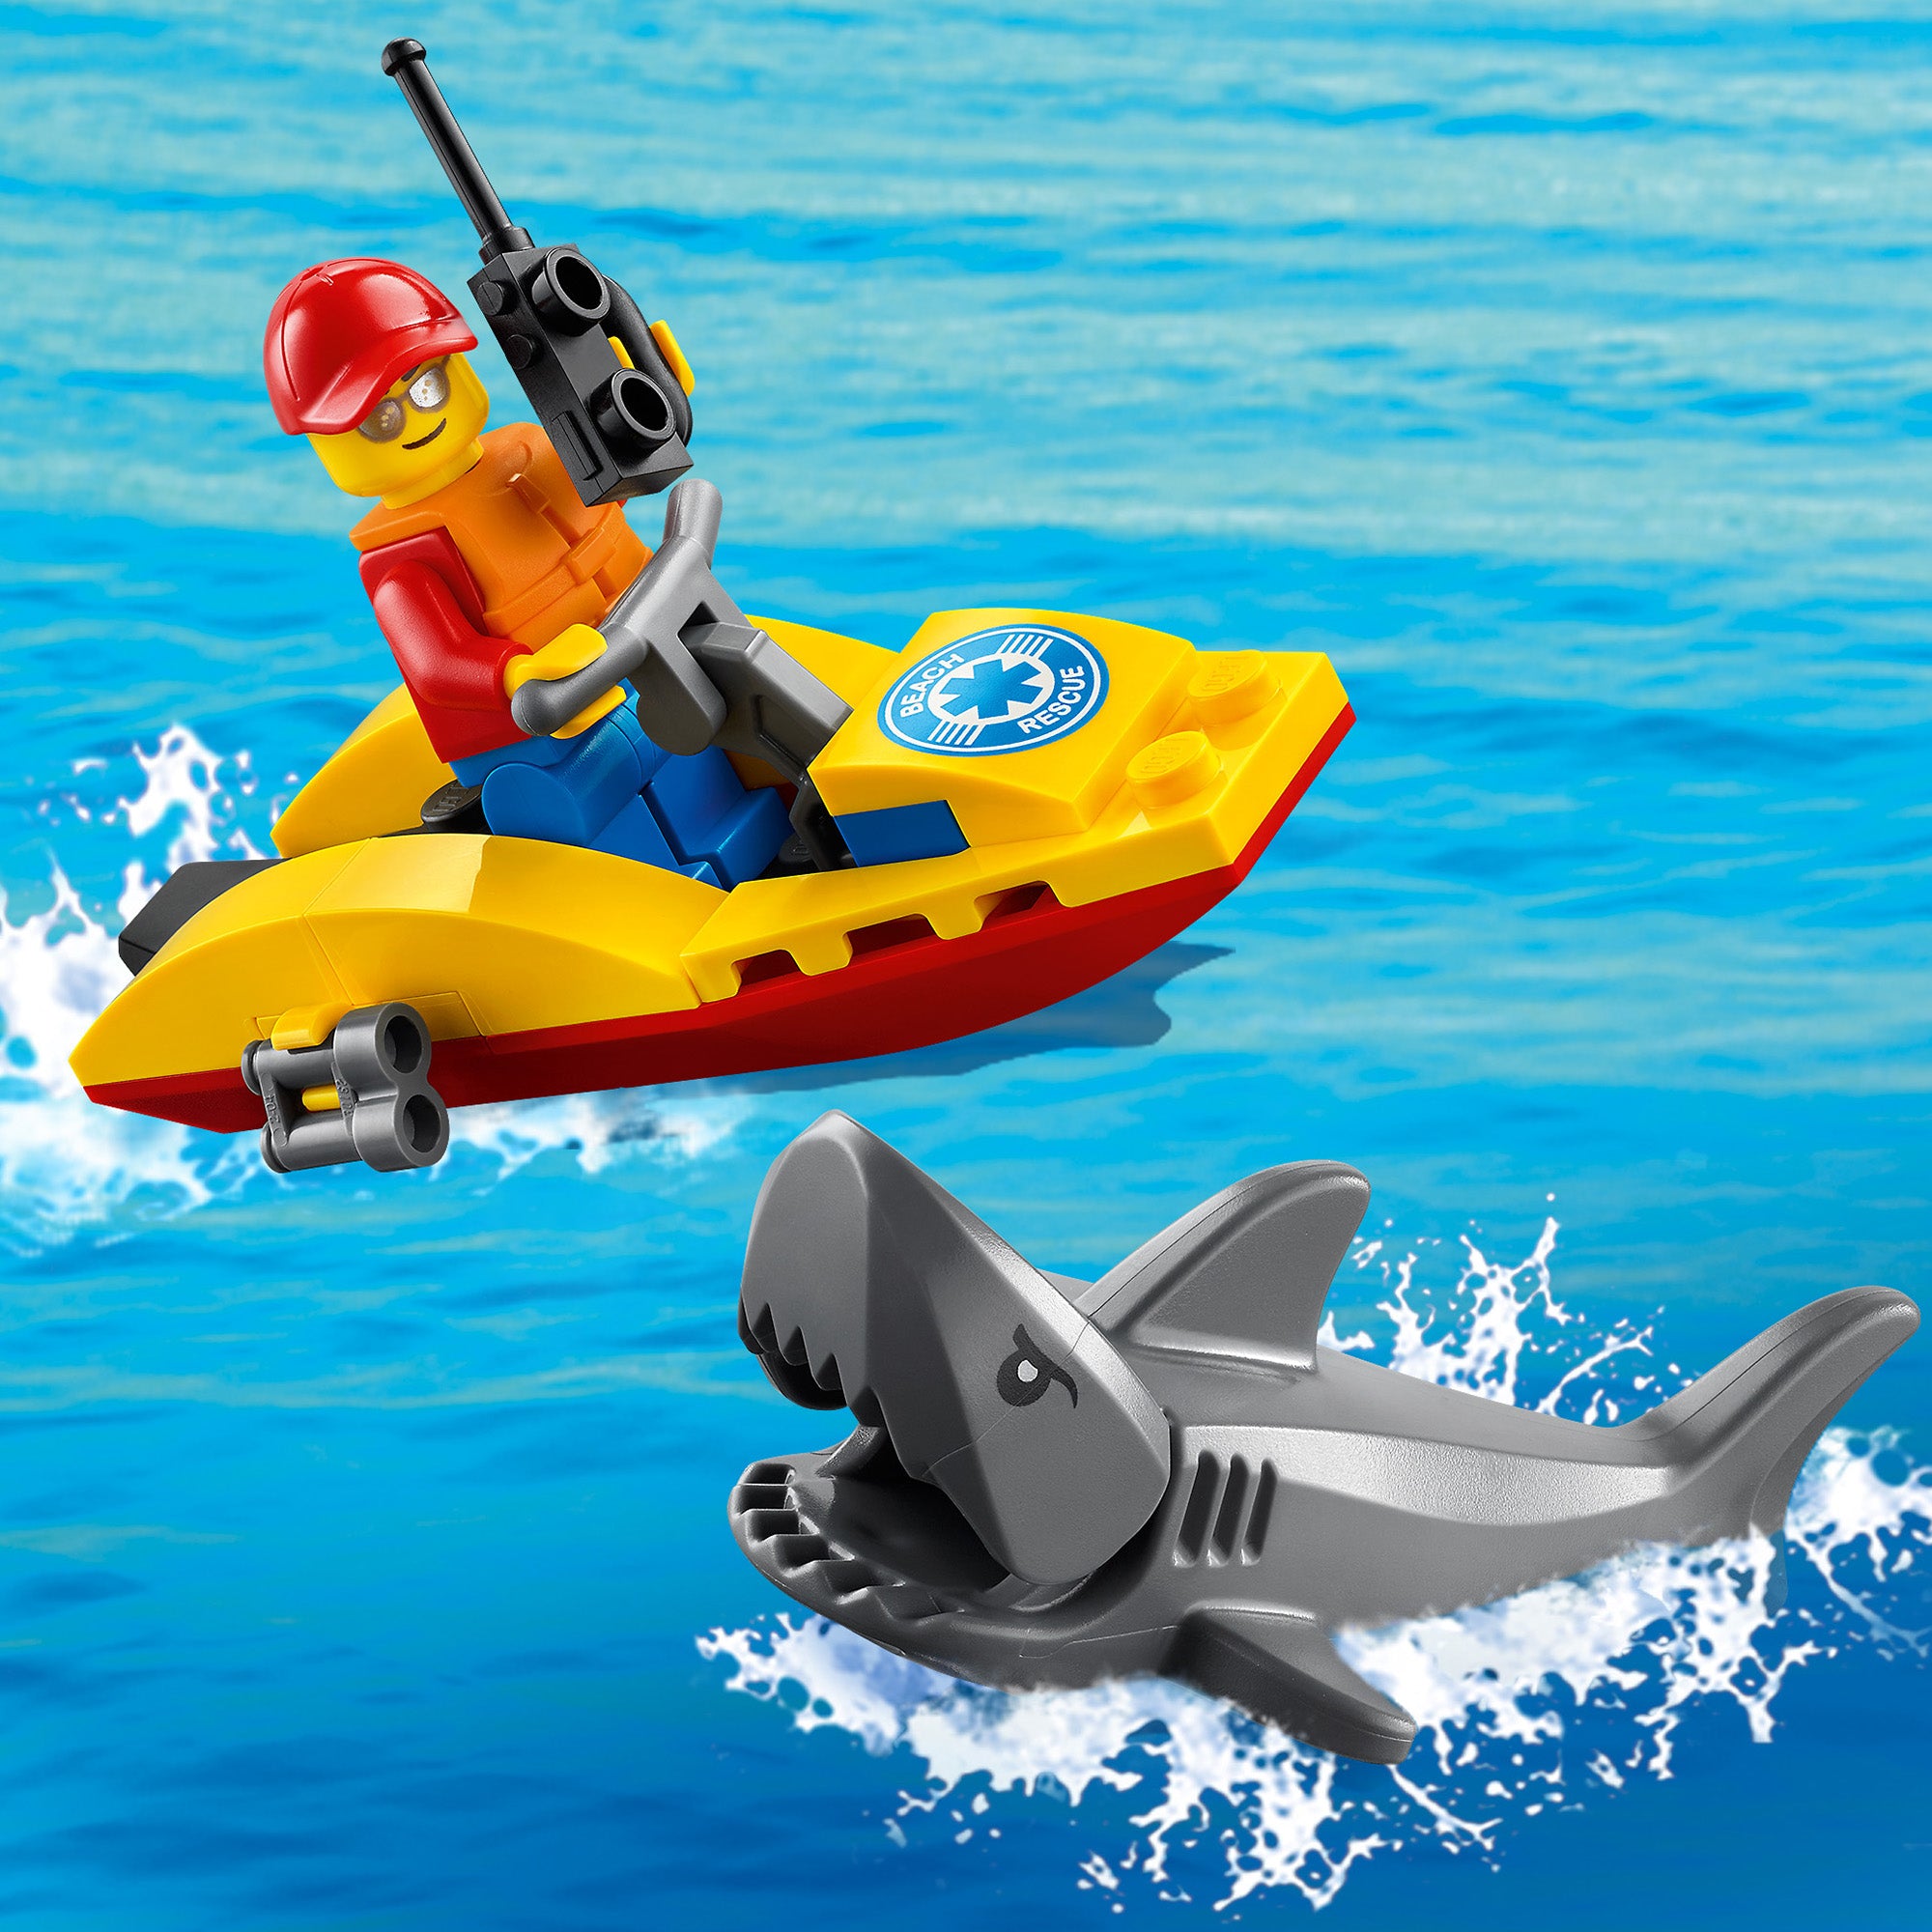 LEGO® City Great Vehicles Beach Rescue ATV Toy 60286 Default Title